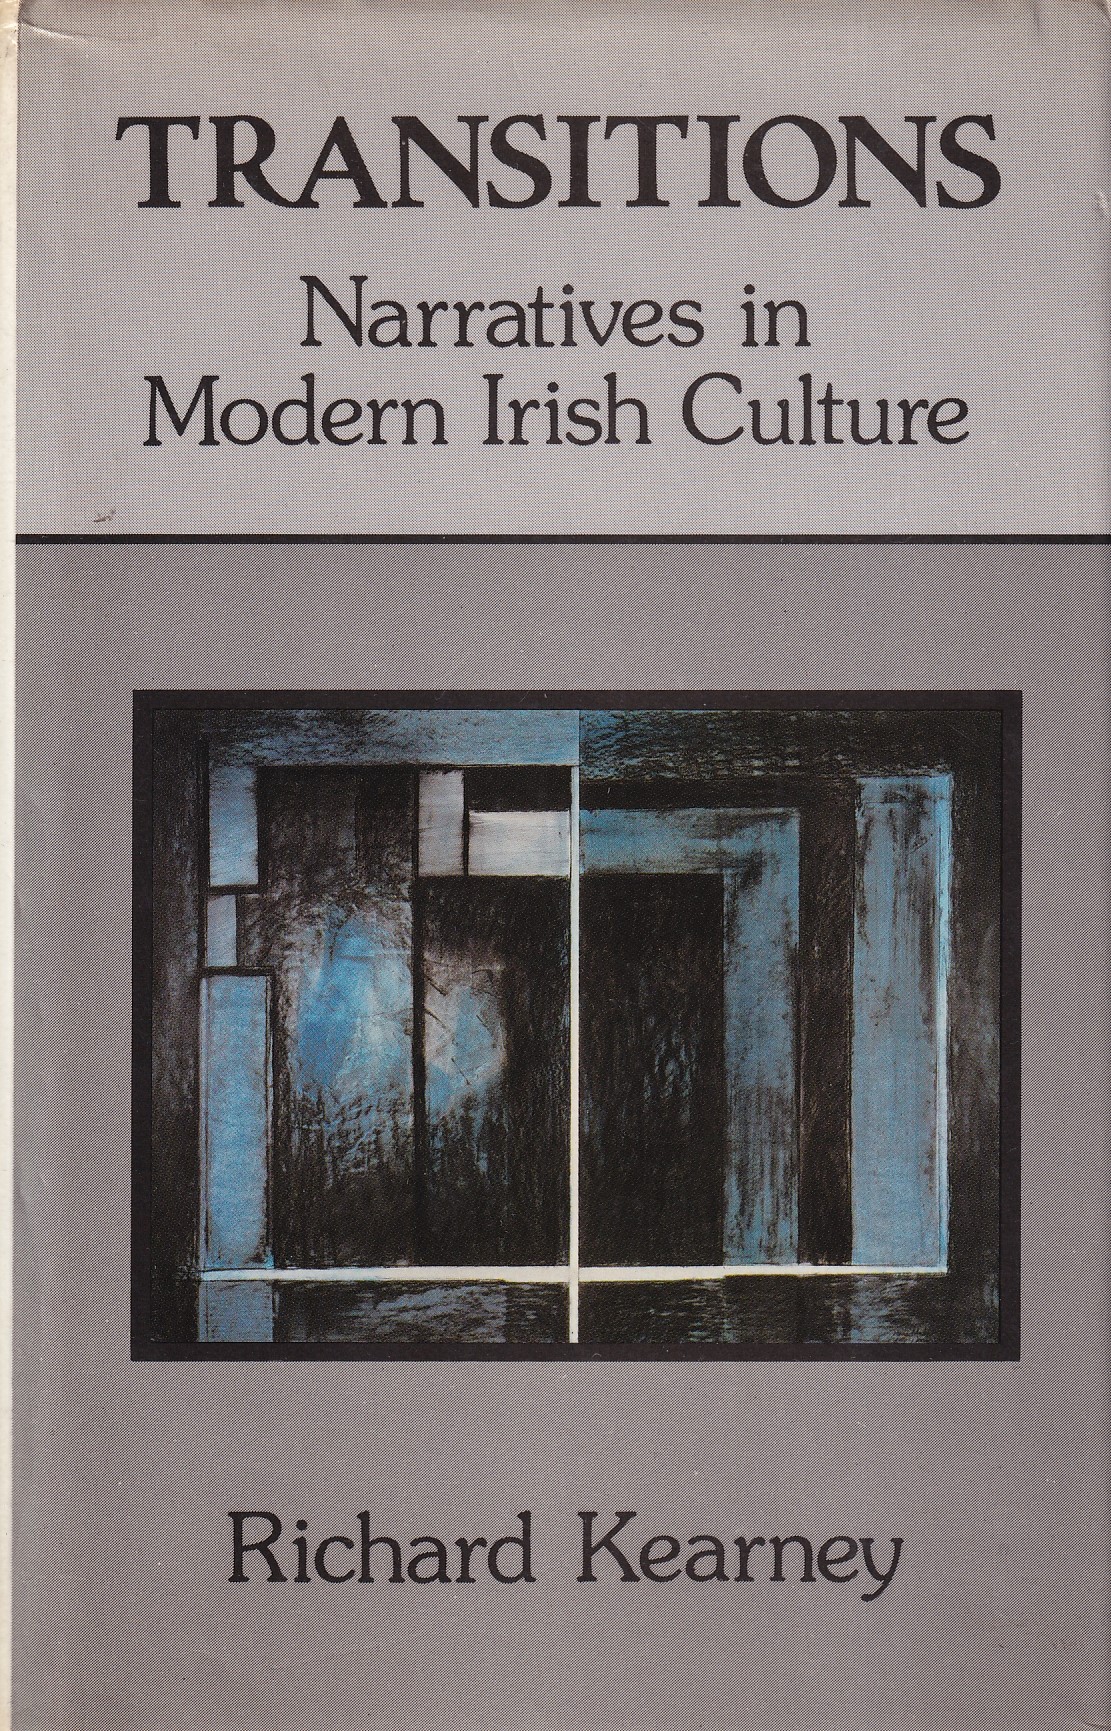 Transitions: Narratives in Modern Irish Culture | Richard Kearney | Charlie Byrne's